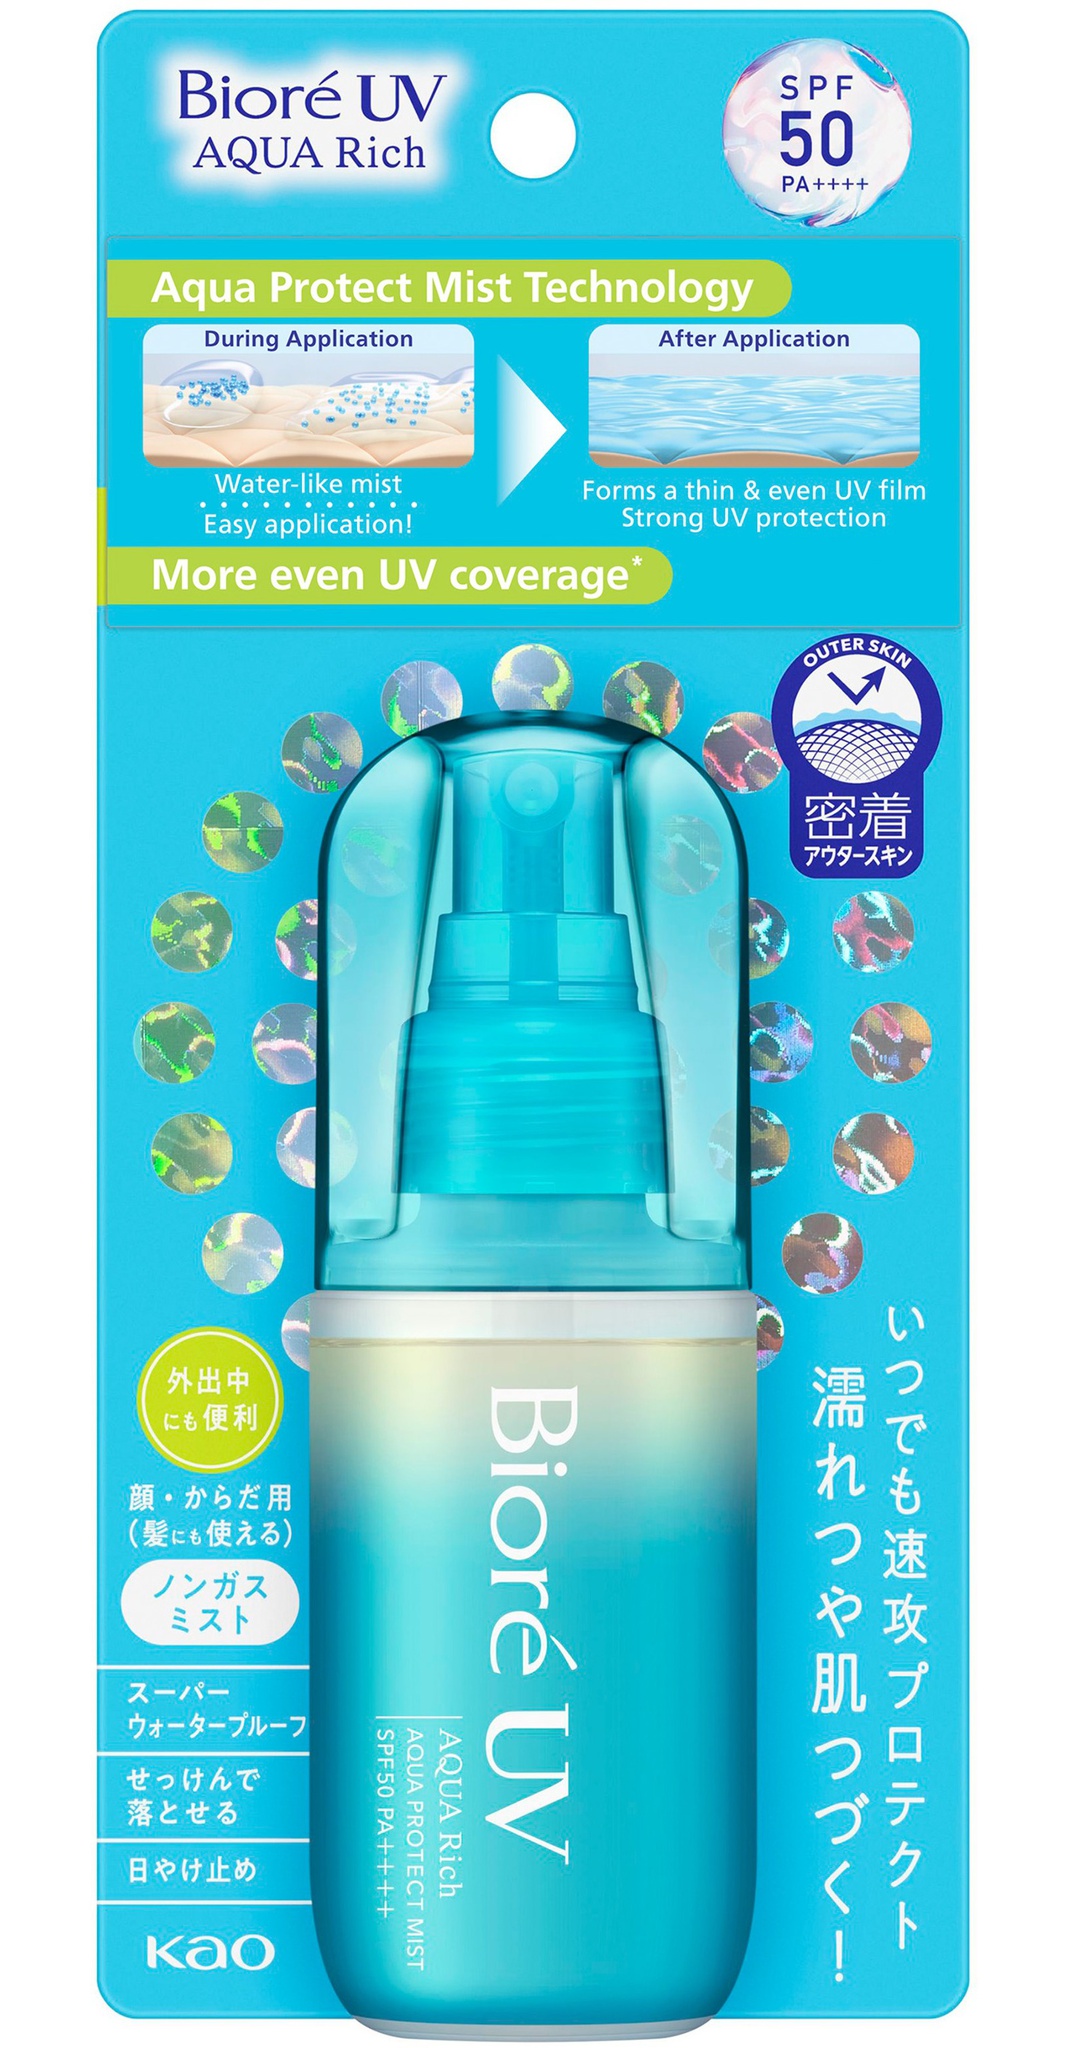 Kao Biore UV Aqua Rich Aqua Protect Mist SPF50 Pa++++